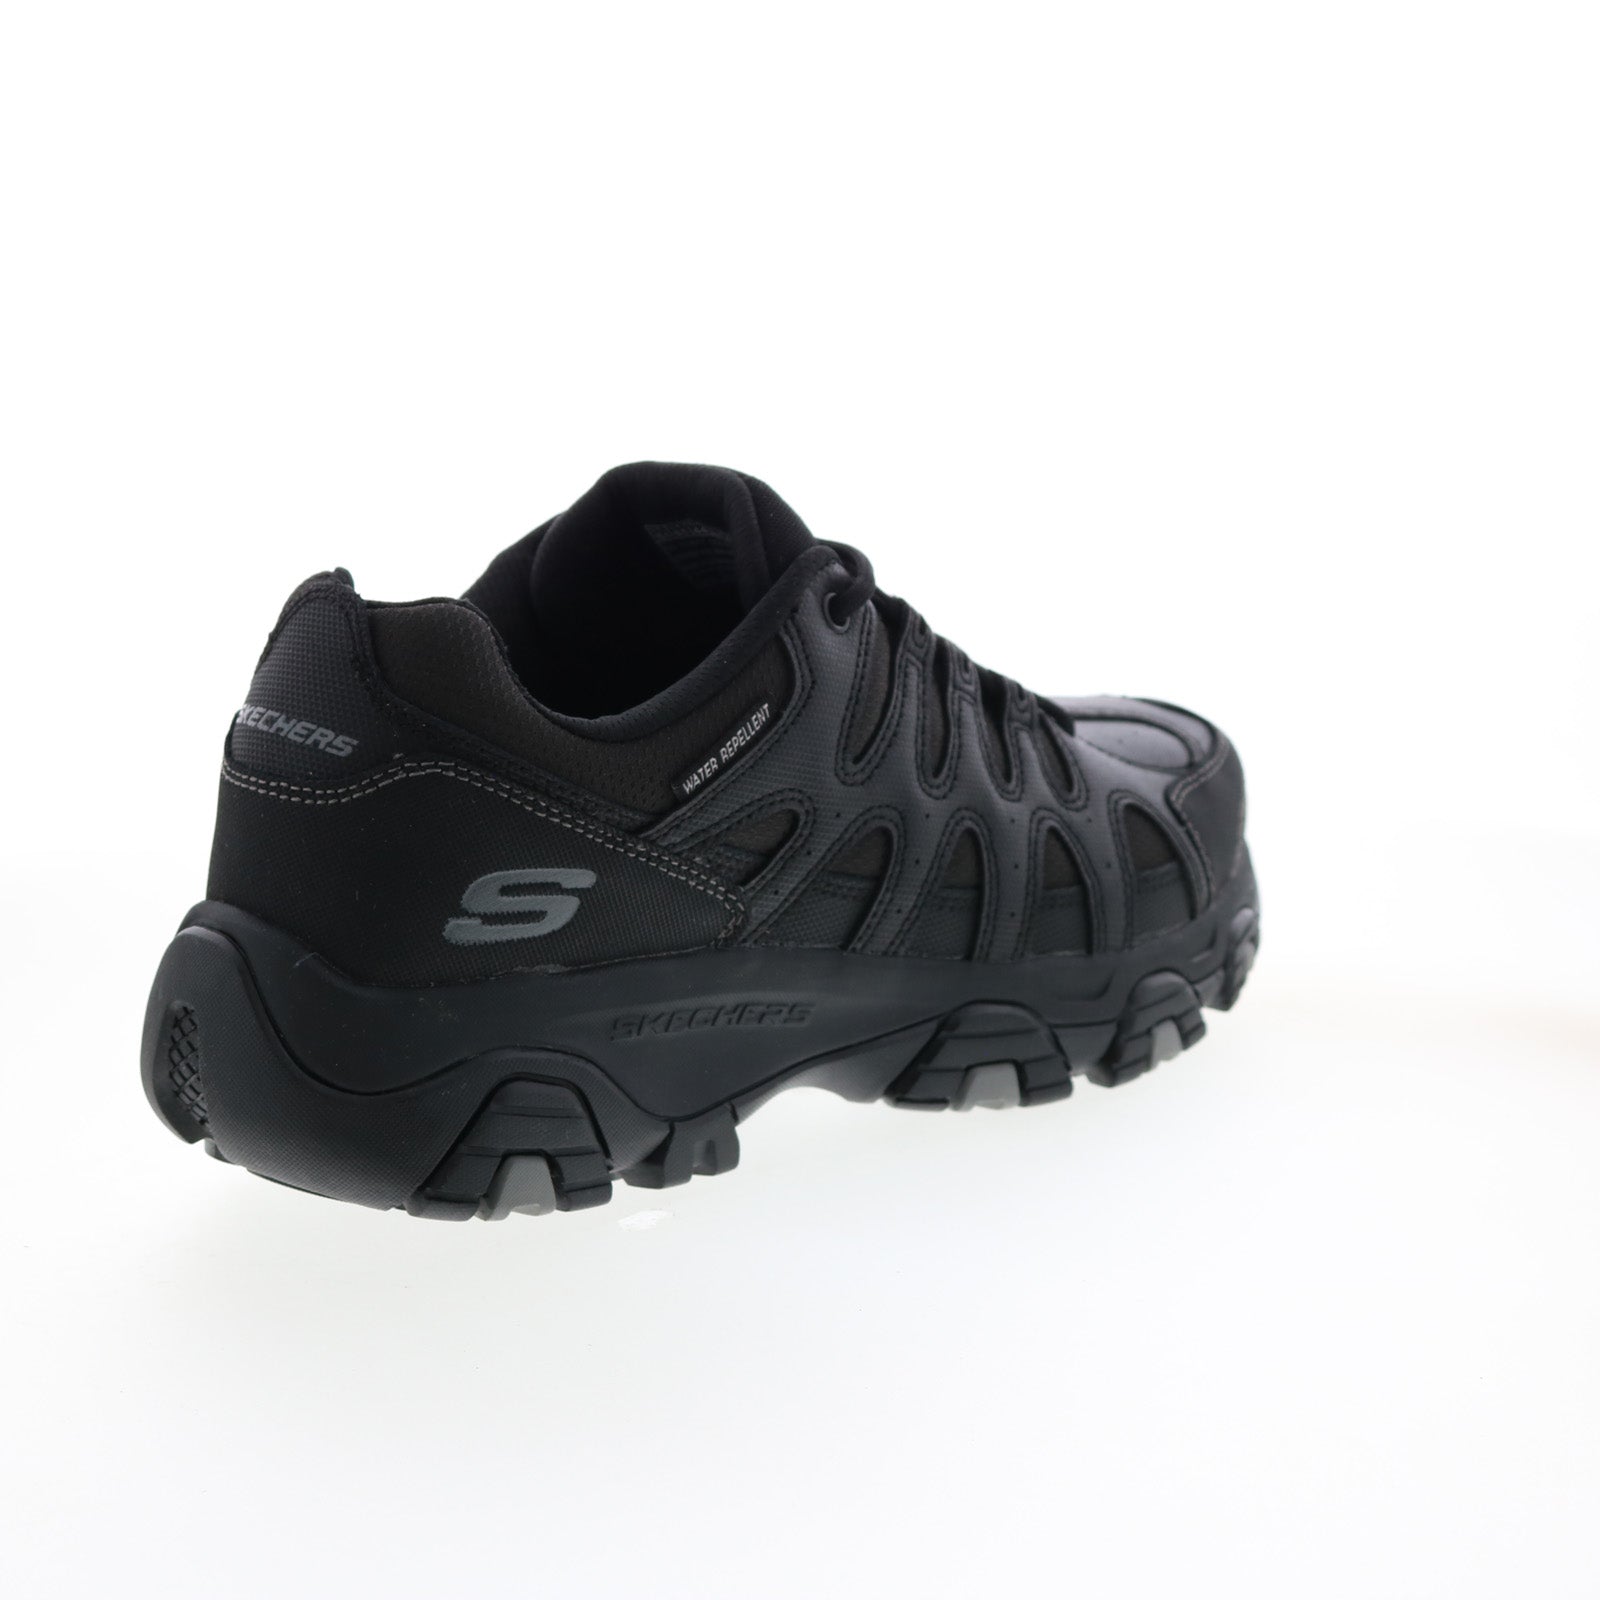 Sho Ruze Hiking Athletic Black Terrabite Mens - Dellga Leather 51847 Shoes Skechers